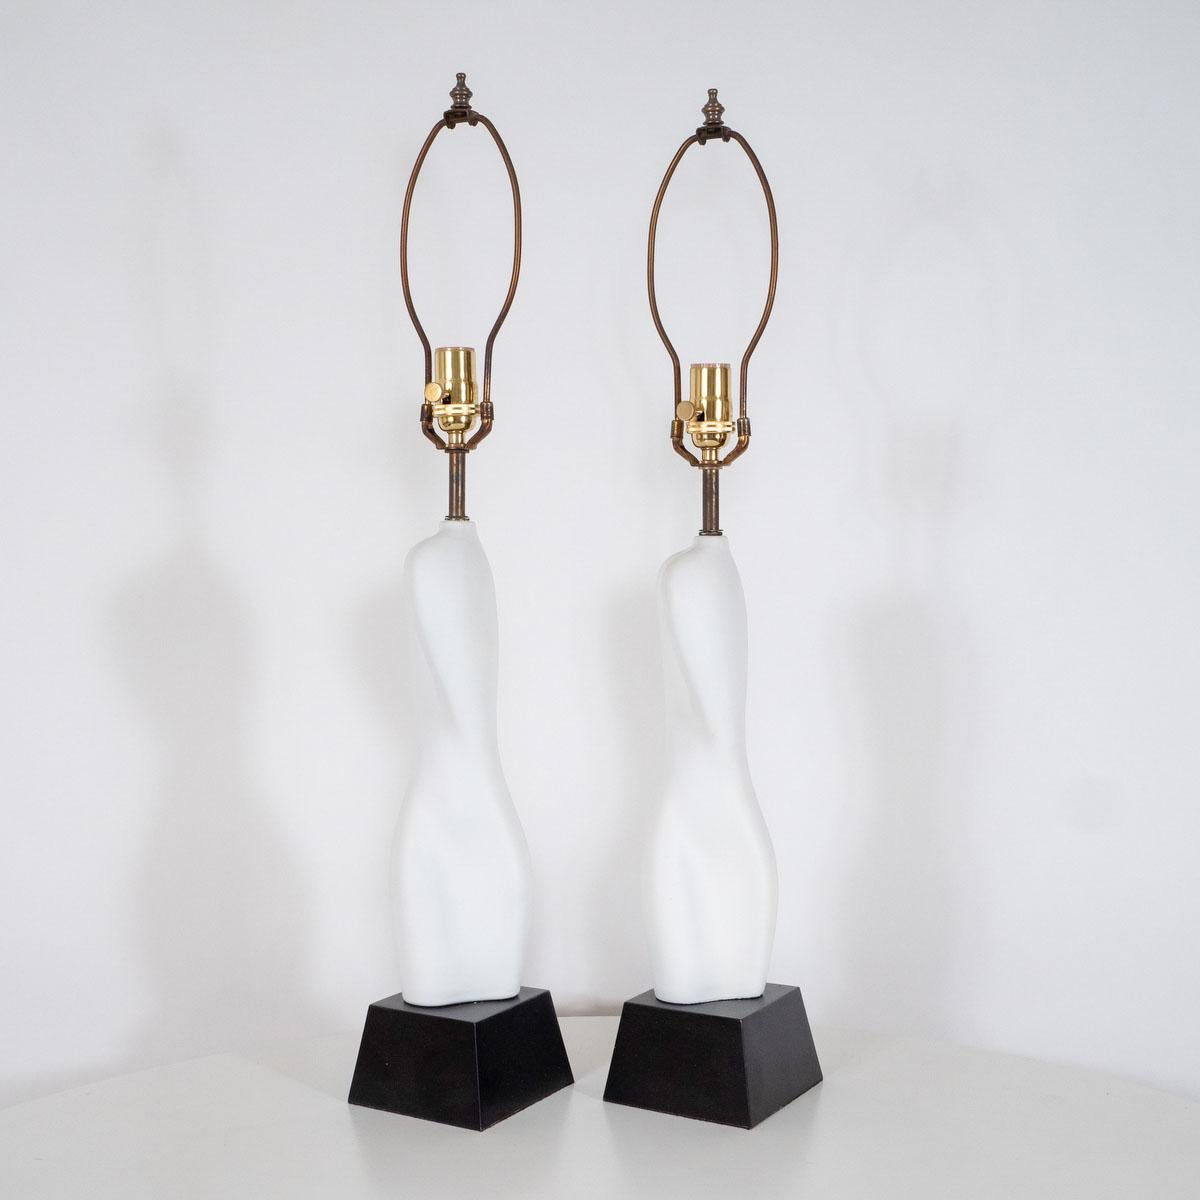 American Pair of Organic Ceramic Table Lamps For Sale